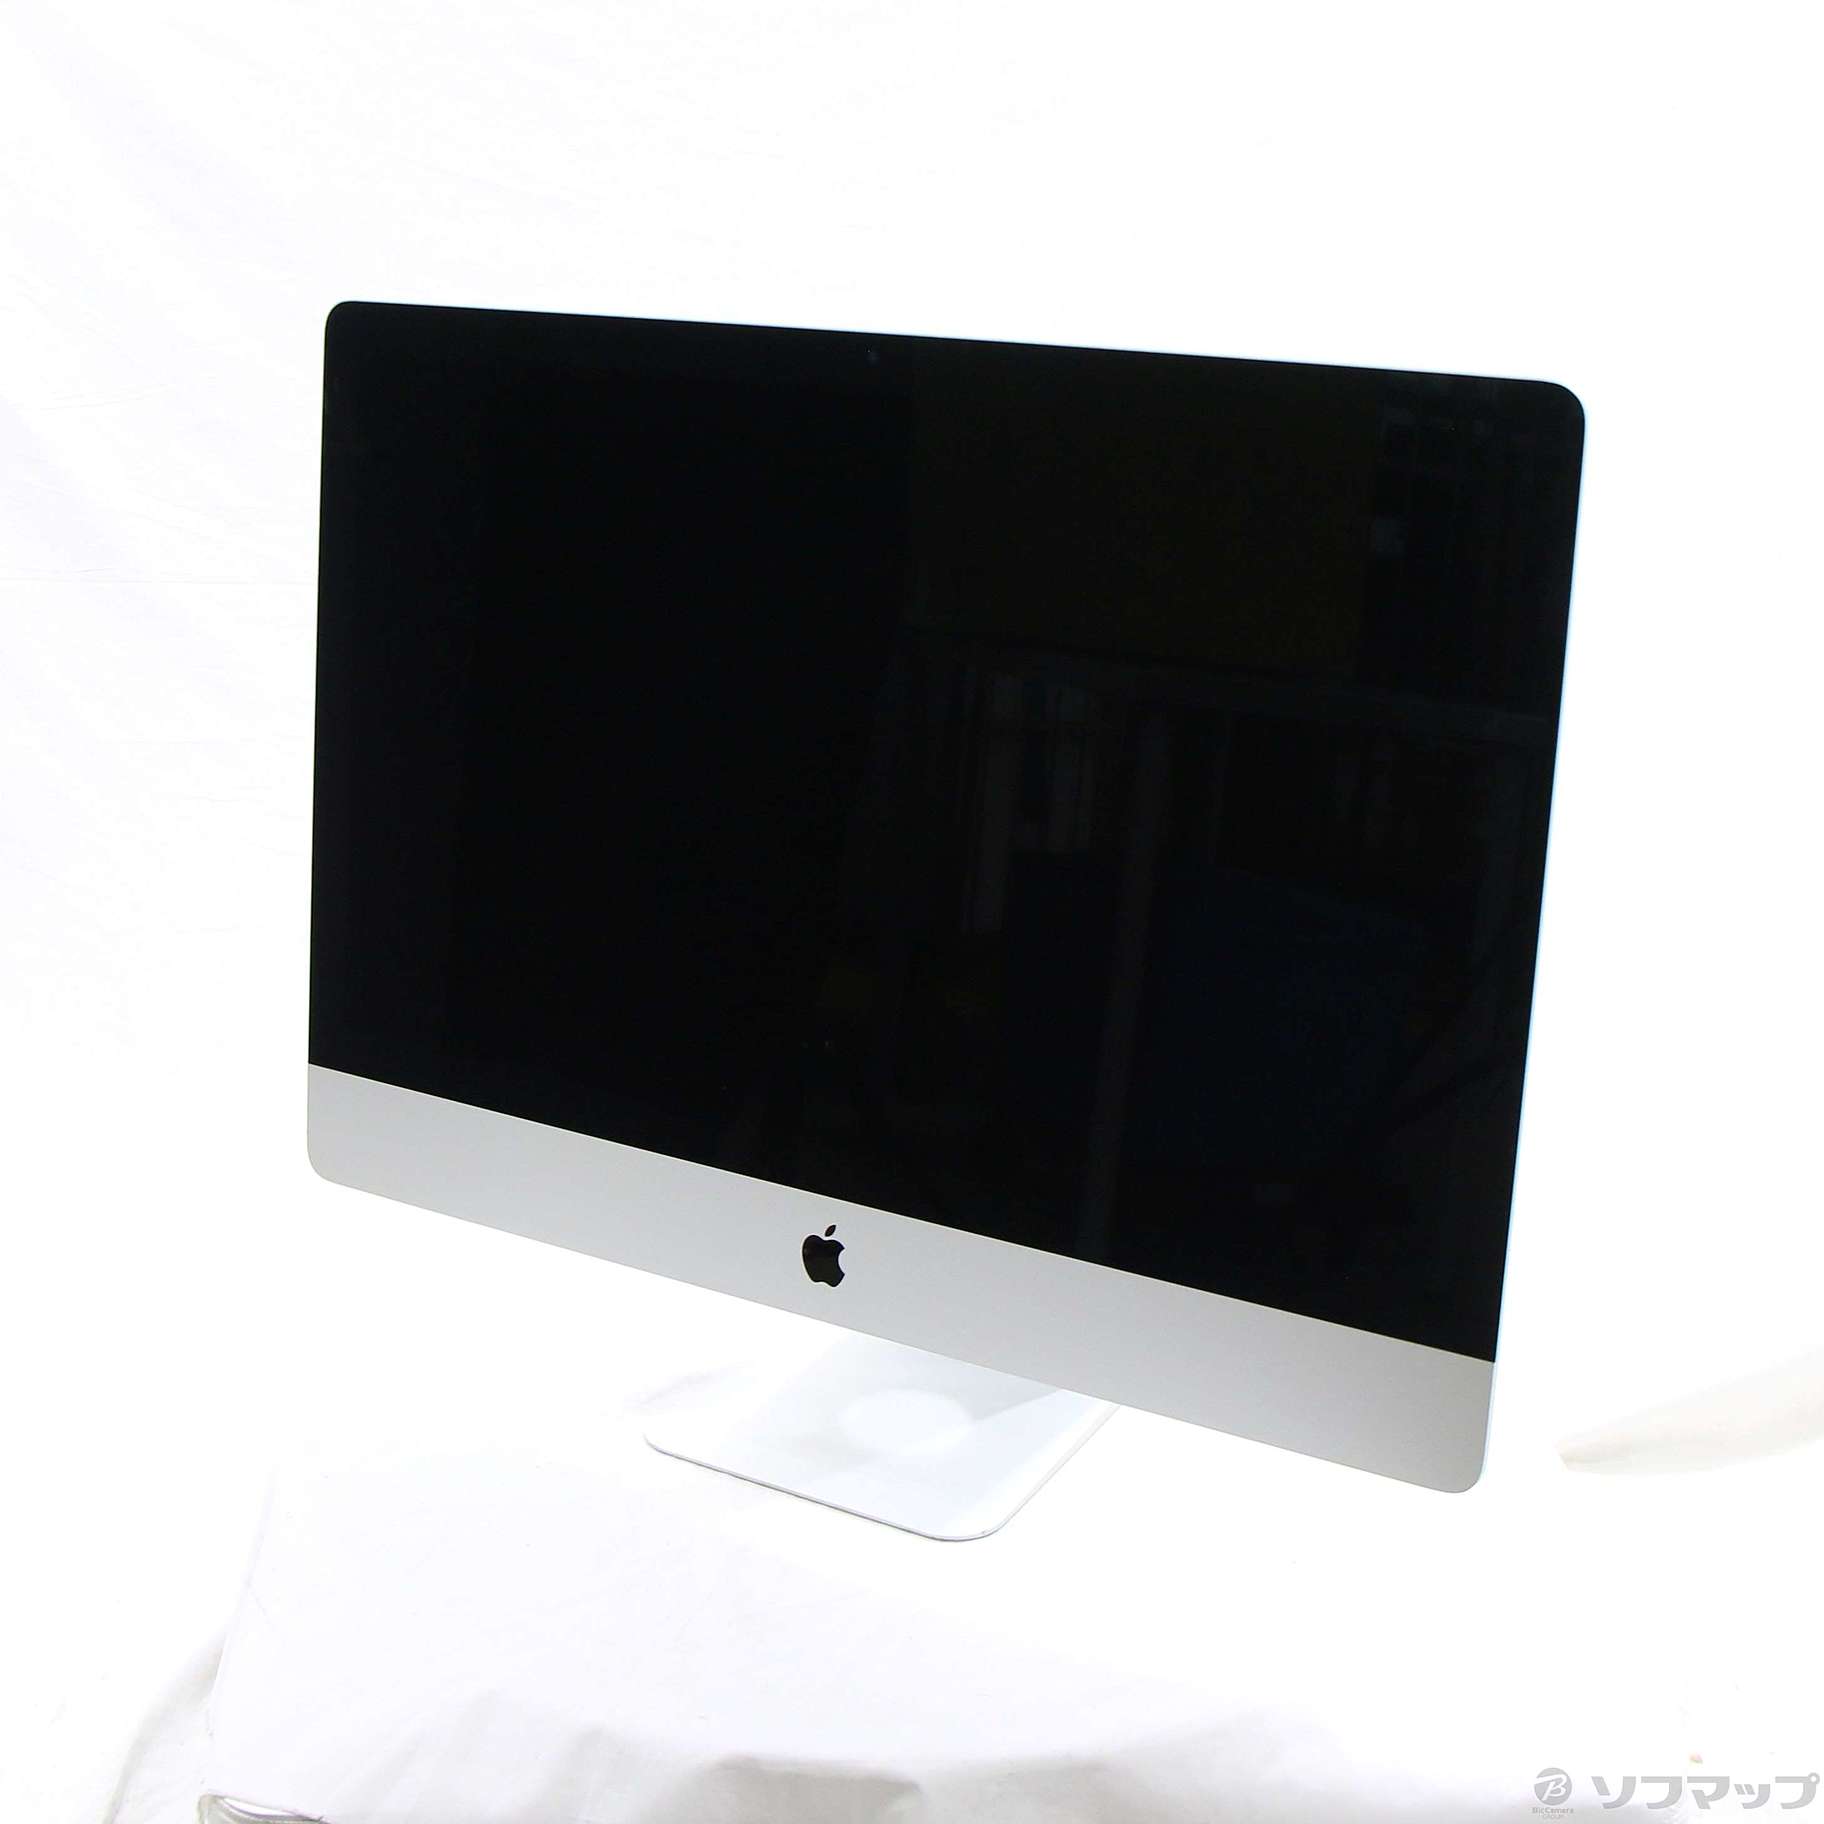 【直接受取】iMac 27-inch Late 2013